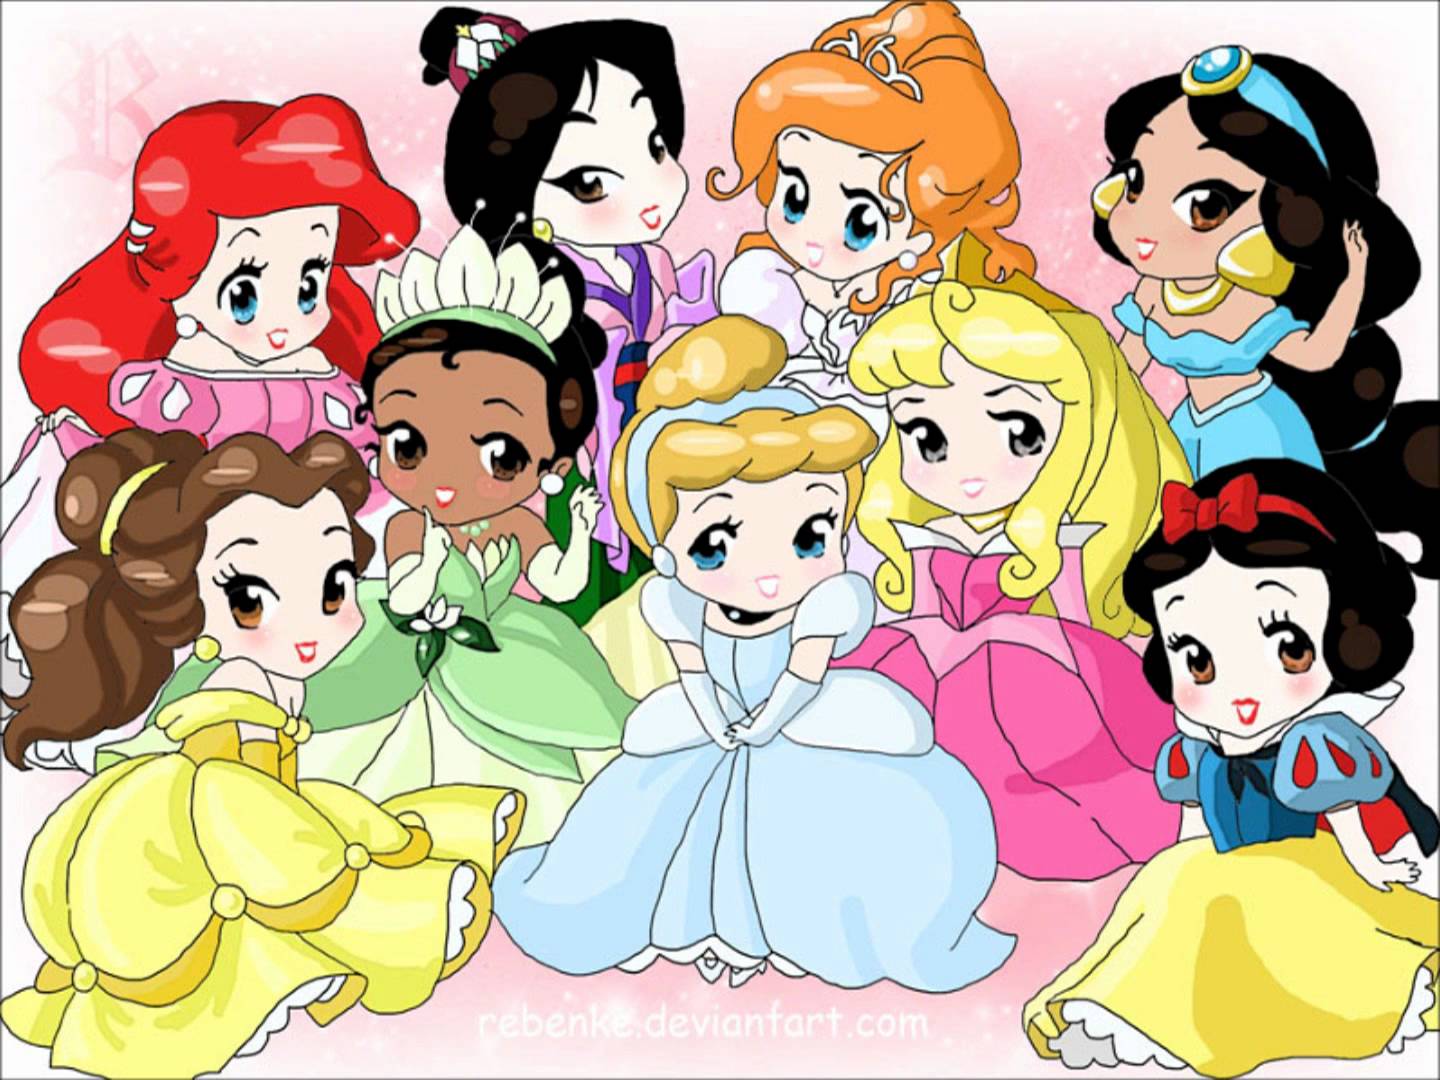 all disney princesses as babies